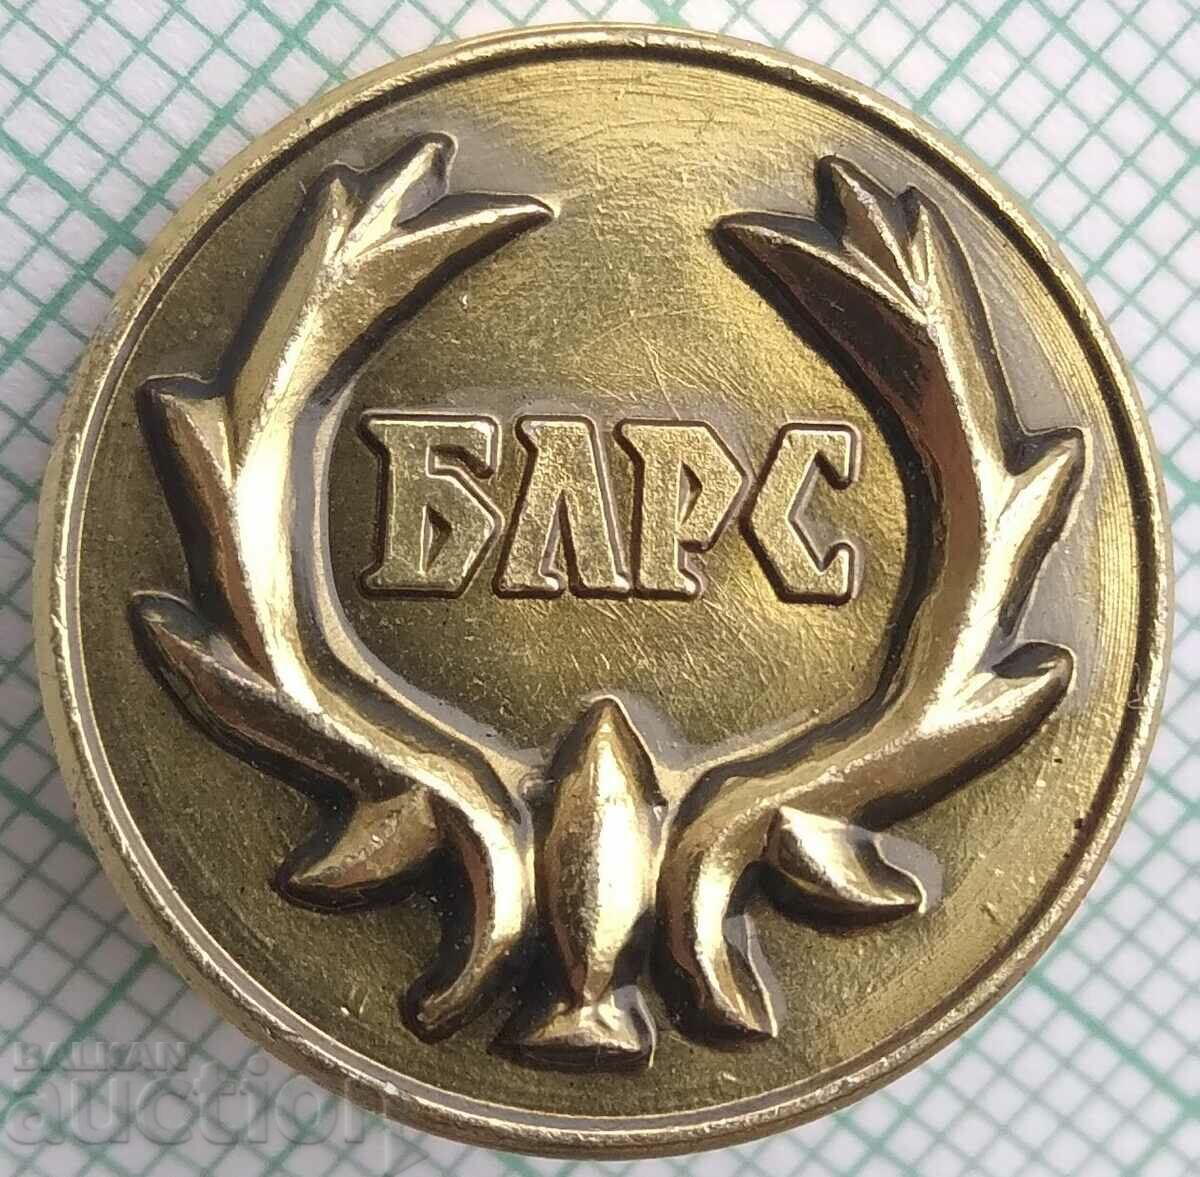 15730 Badge - BLRS Bulgarian Hunting and Fishing Union